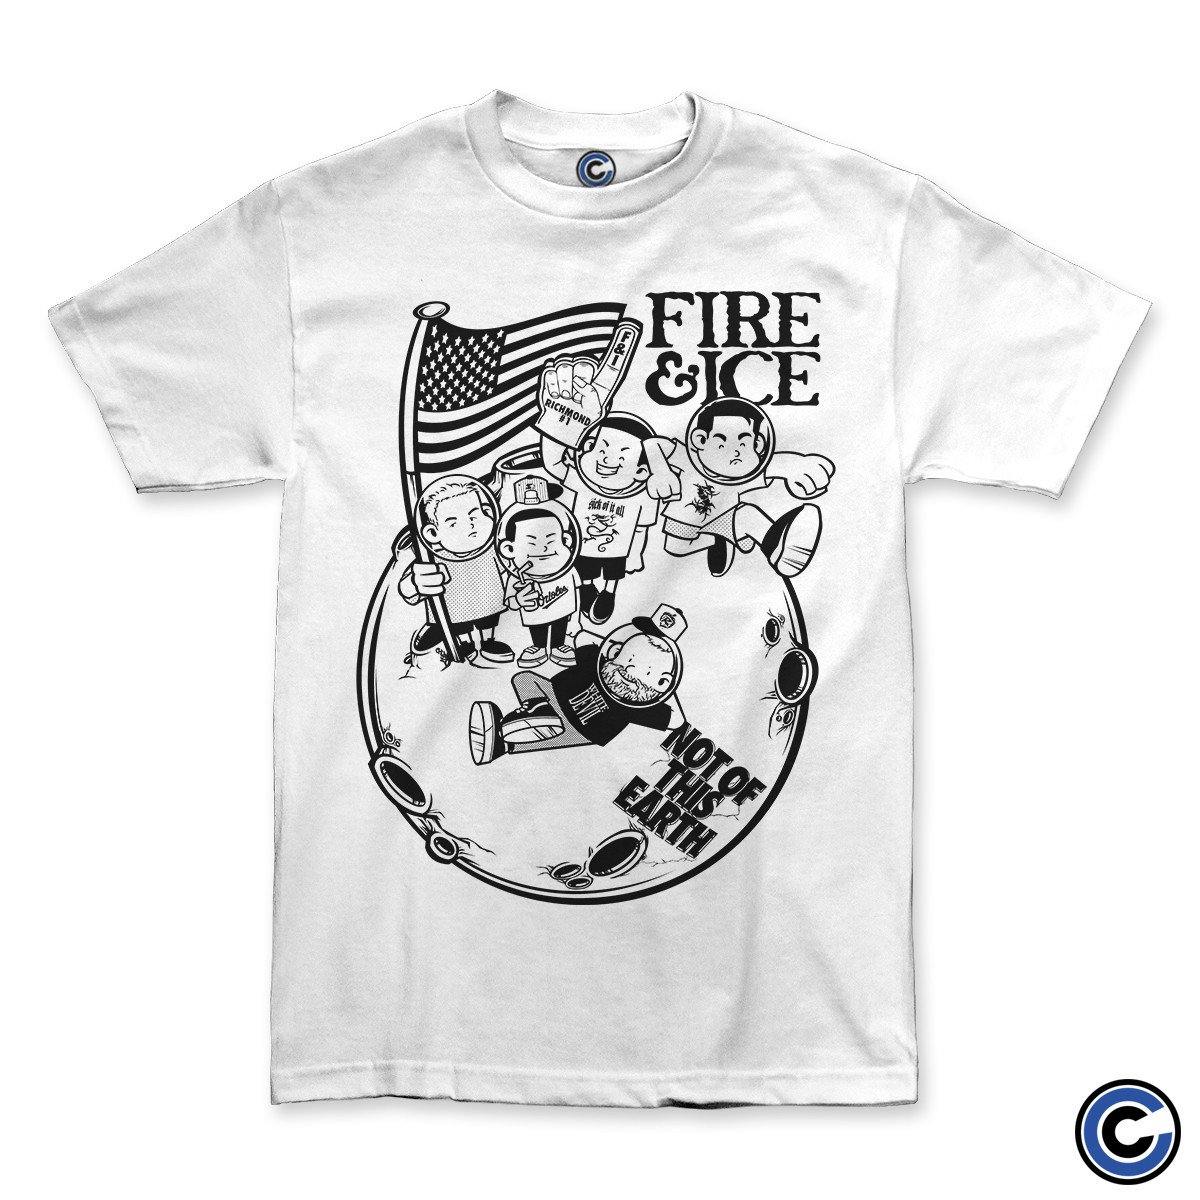 Buy – Fire & Ice "Not Of This Earth Chun" Shirt – Band & Music Merch – Cold Cuts Merch